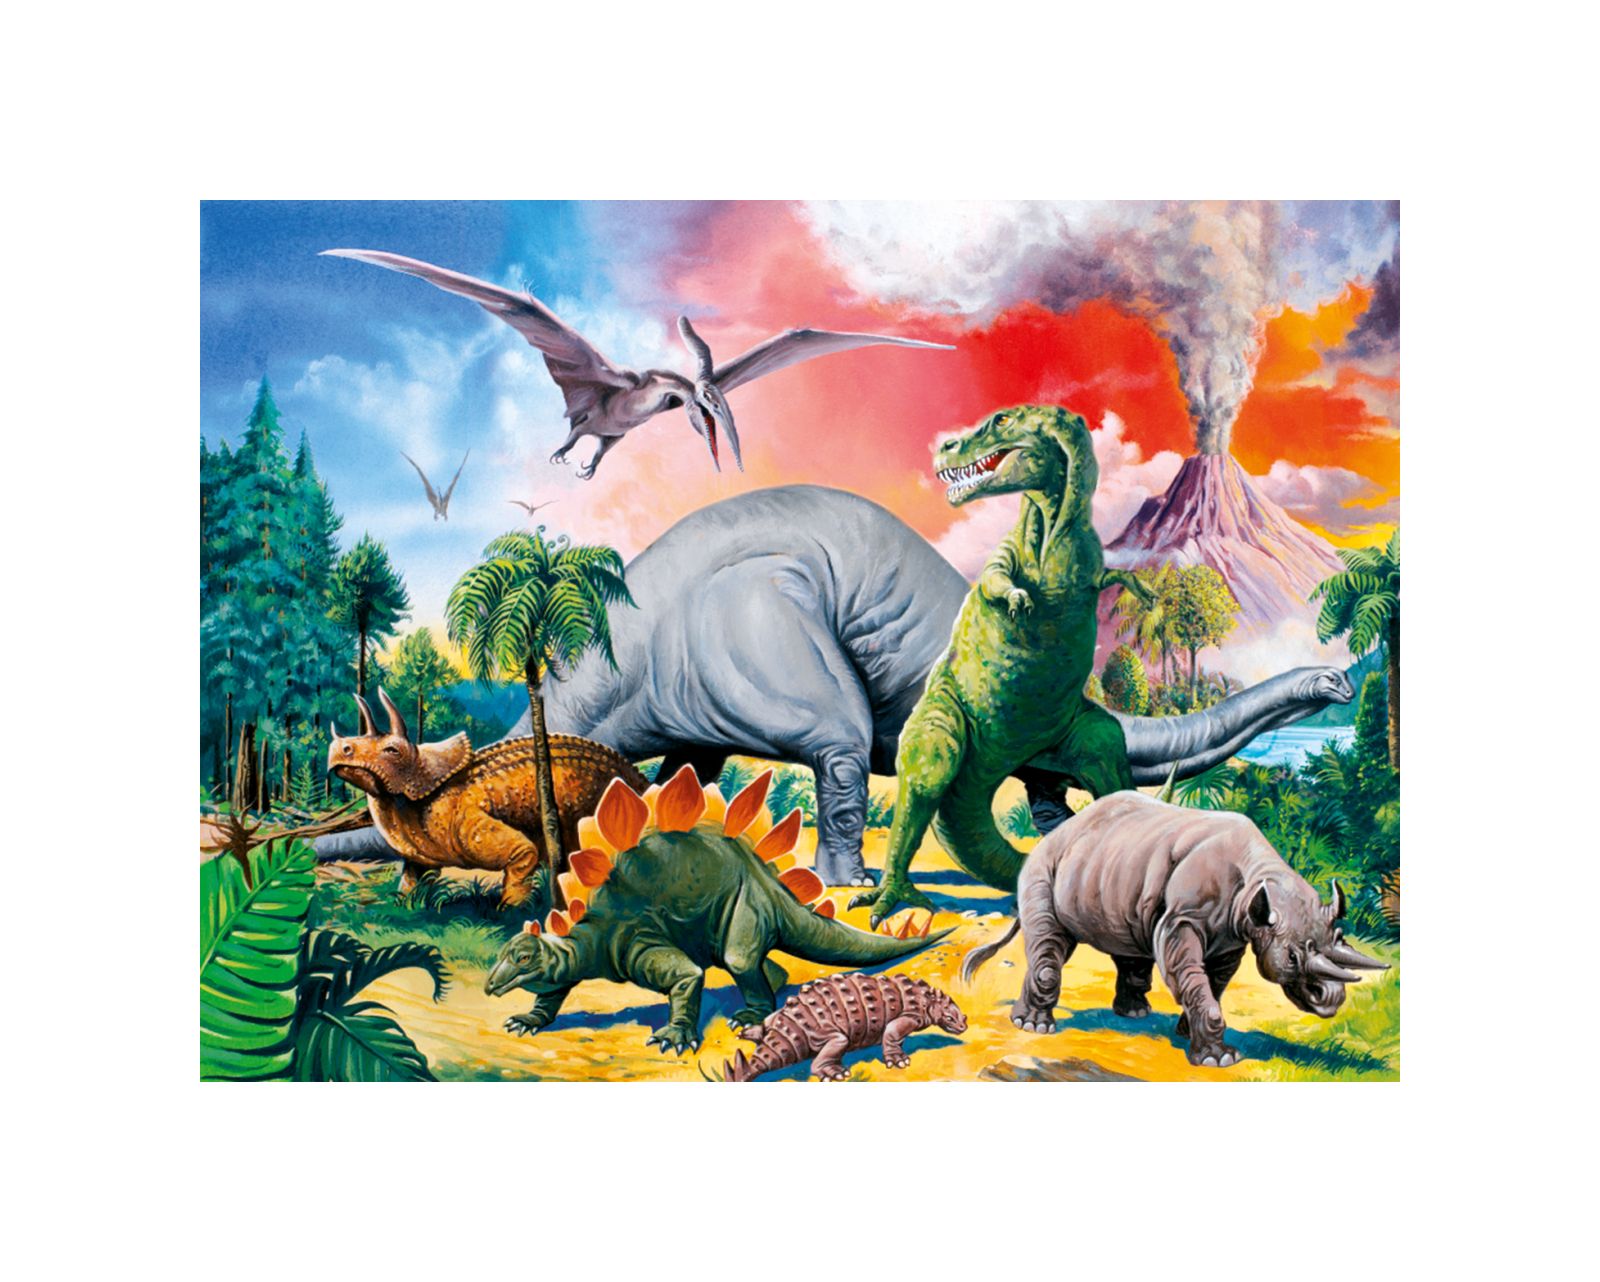 Ravensburger puzzle 100 pezzi xxl - dinosauri - RAVENSBURGER